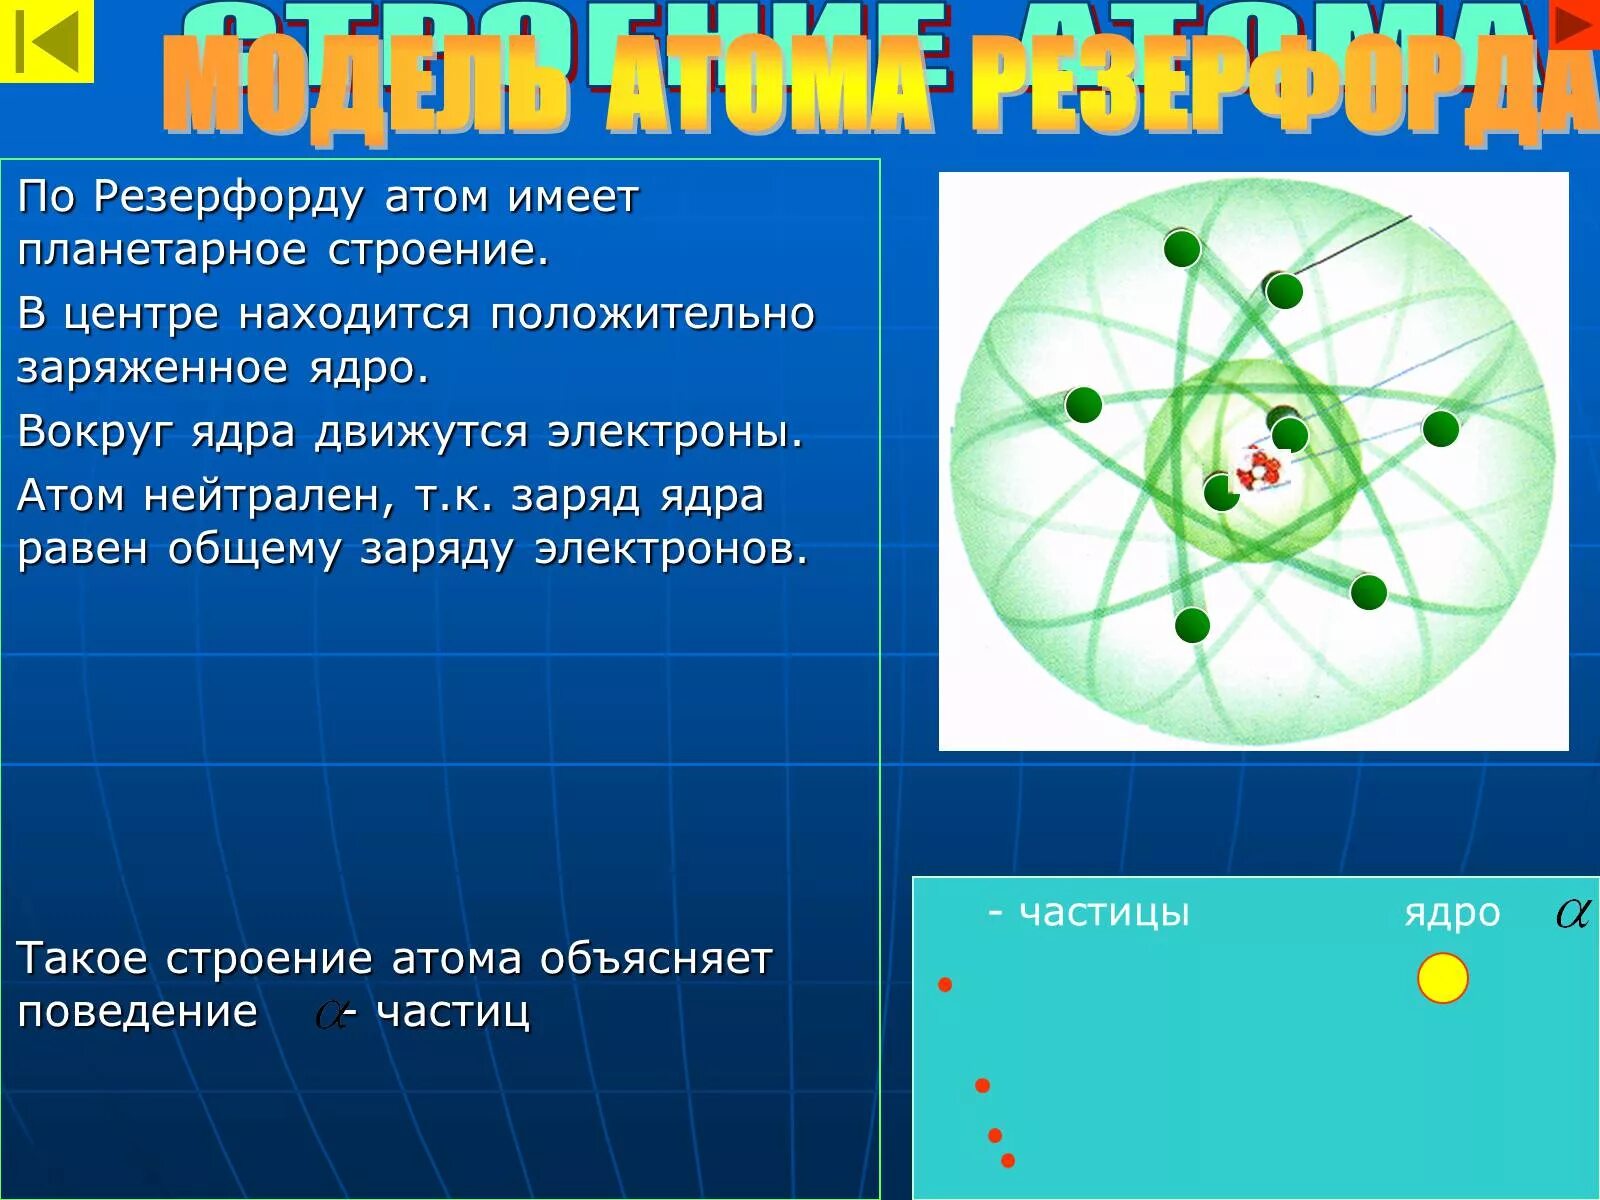 Ядро атома Резерфорда. Атомное ядро модель ядра Резерфорда. Строение ядра по Резерфорду. Строение атома по Резерфорду. Какой заряд имеет атом и атомное ядро